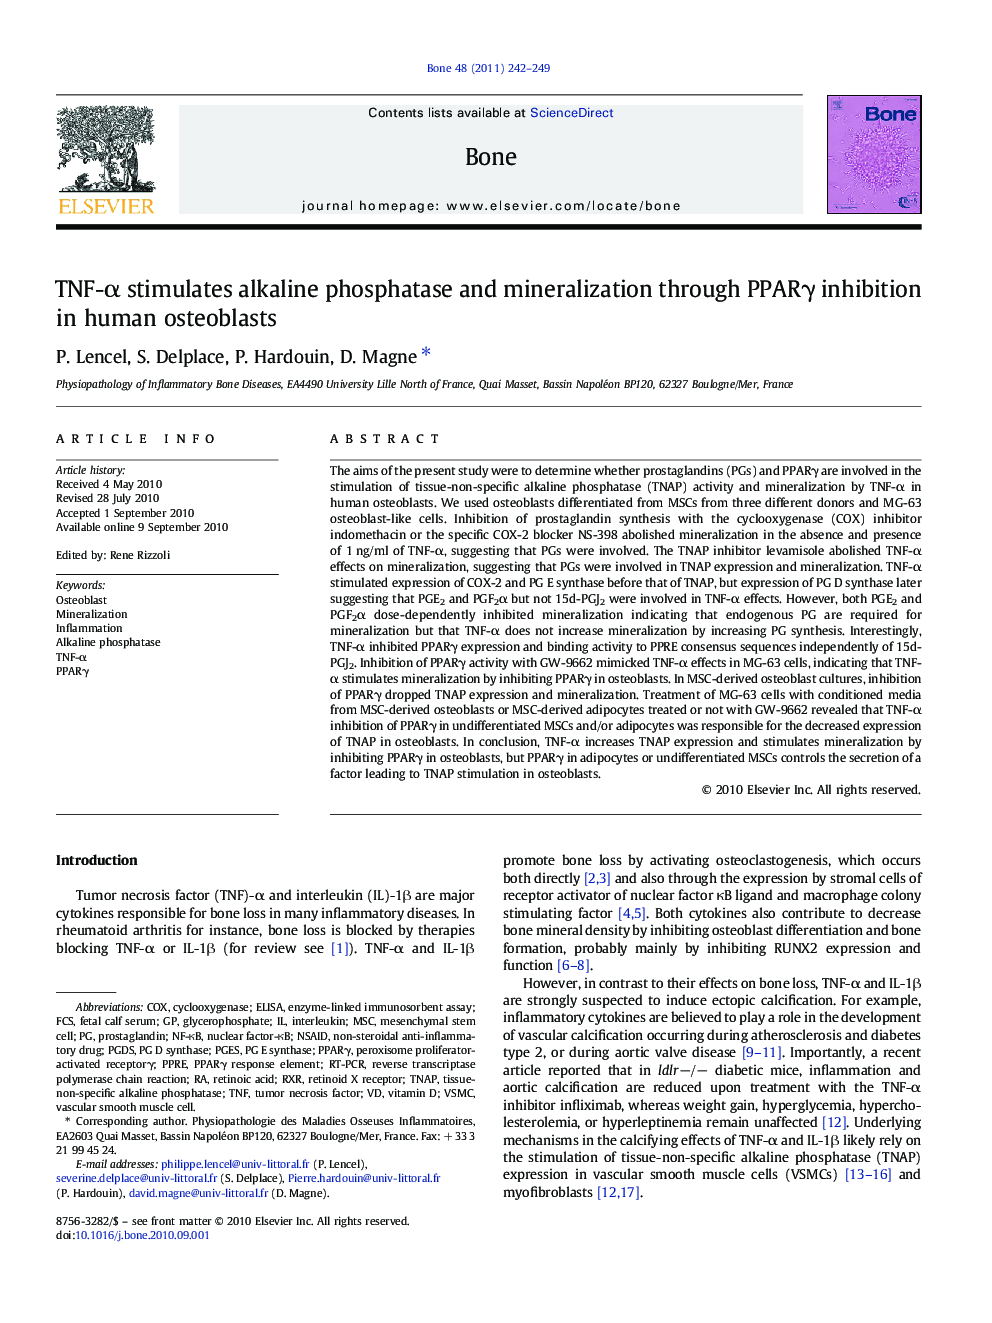 TNF-α stimulates alkaline phosphatase and mineralization through PPARγ inhibition in human osteoblasts